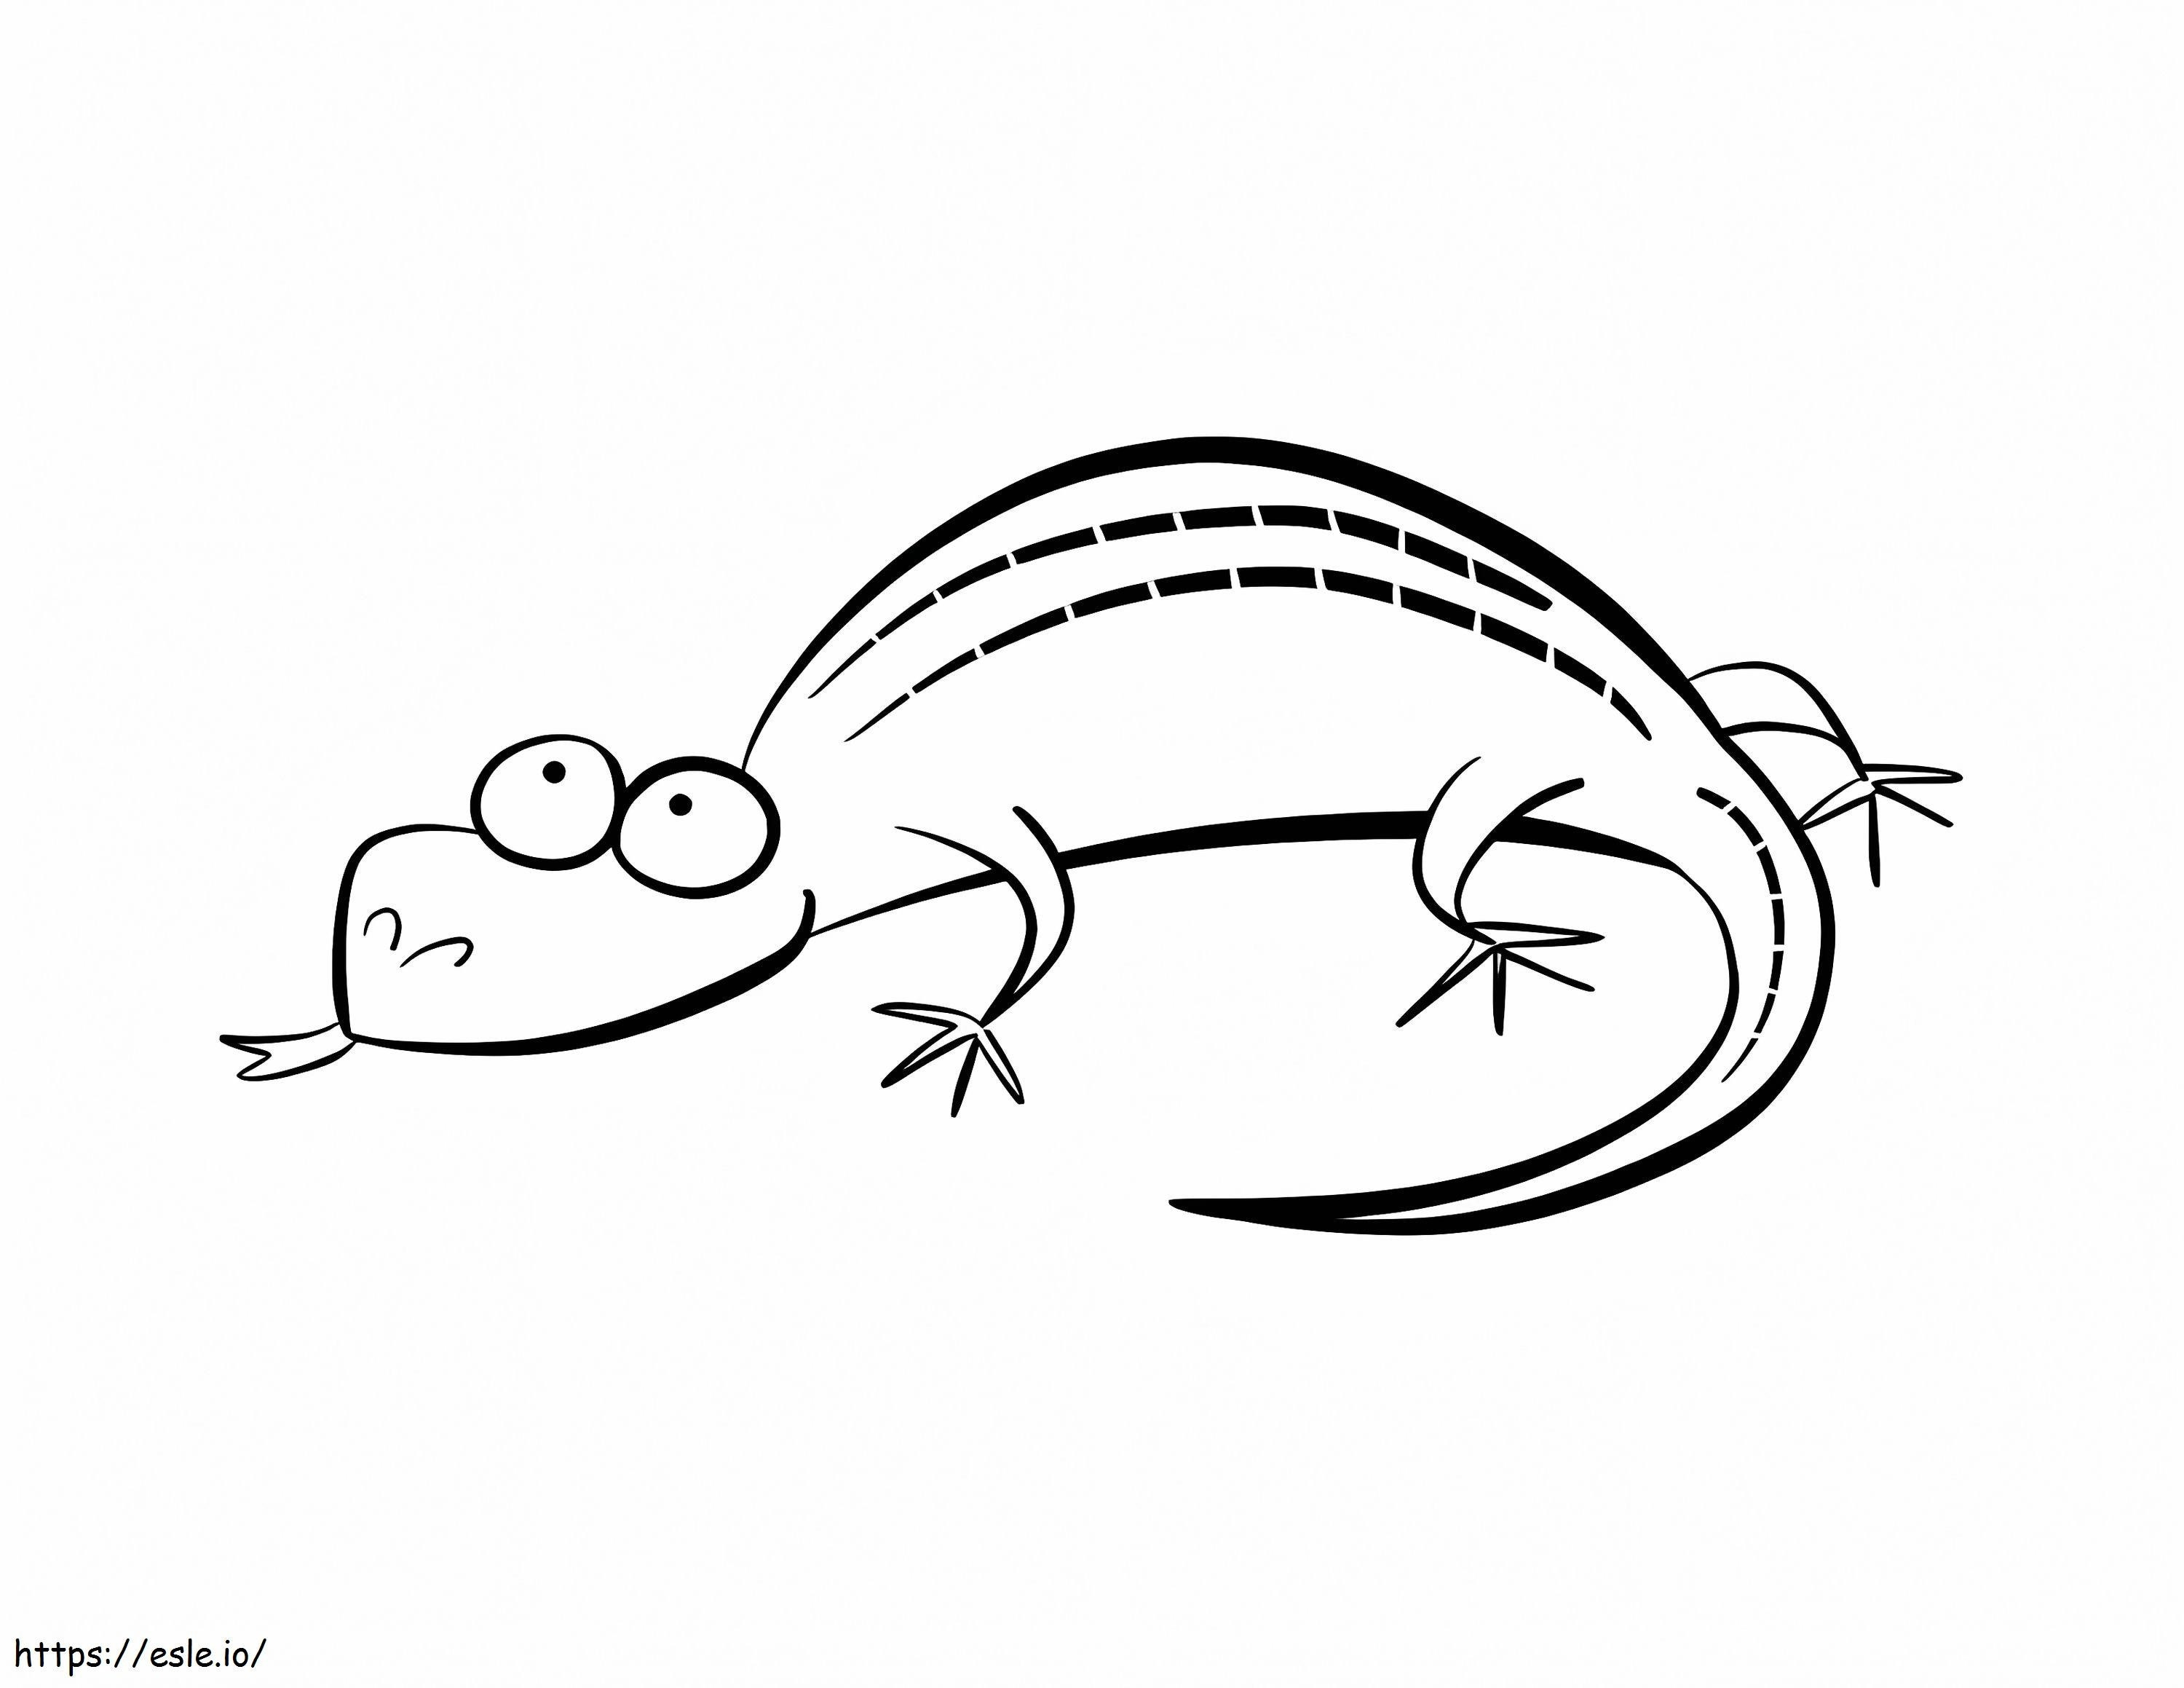 Desenho de lagarto para colorir